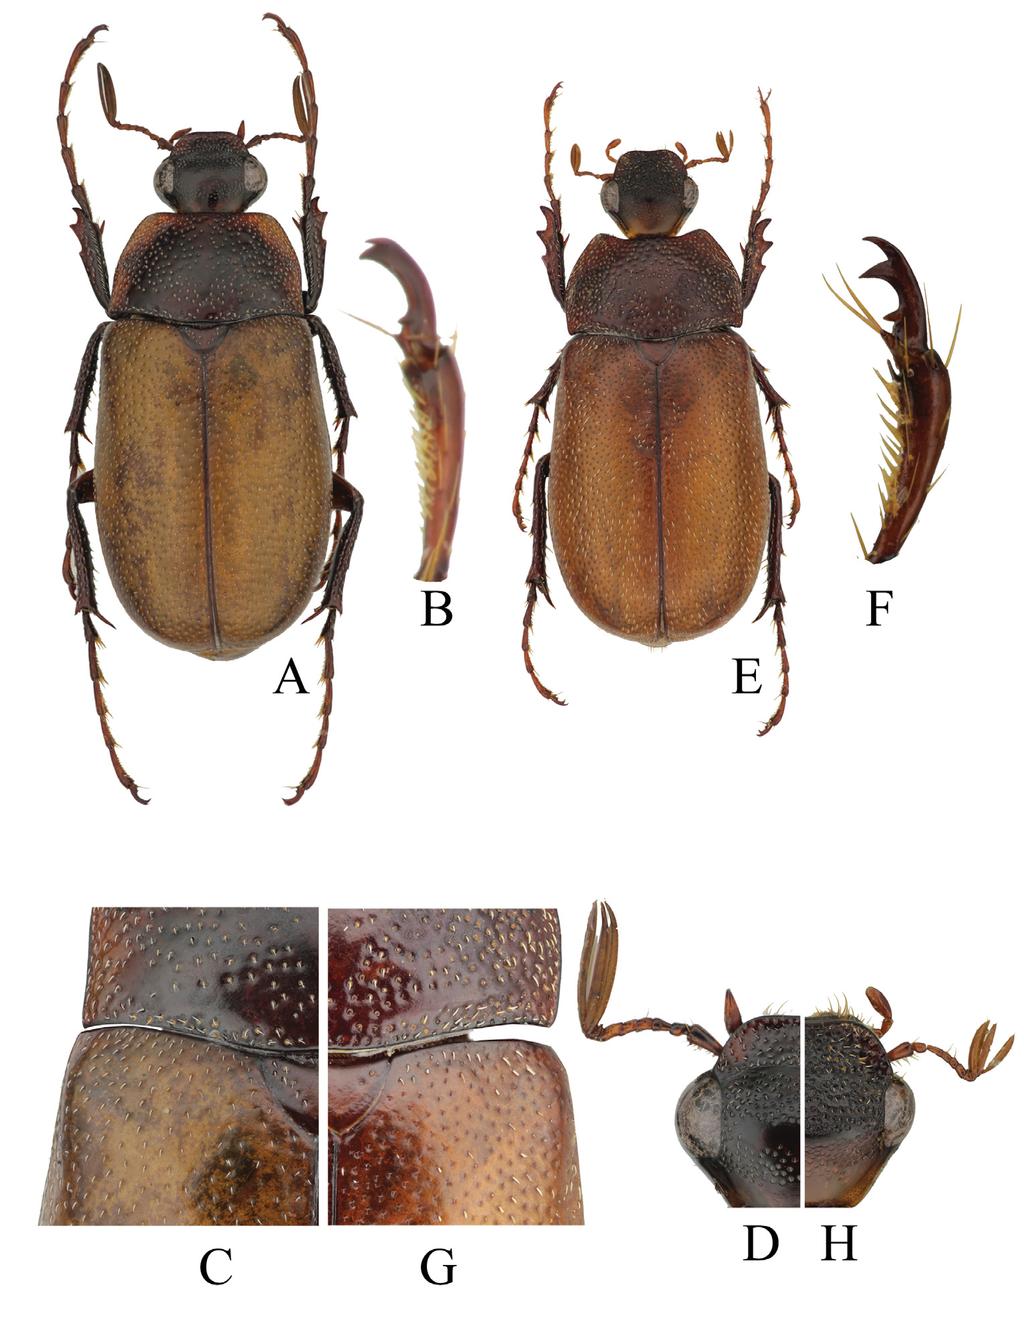 160 SEHNAL et al.: Revision of the Canuschiza insularis species group (Scarabaeidae) Figs 8A H. Canuschiza jatropha sp. nov.